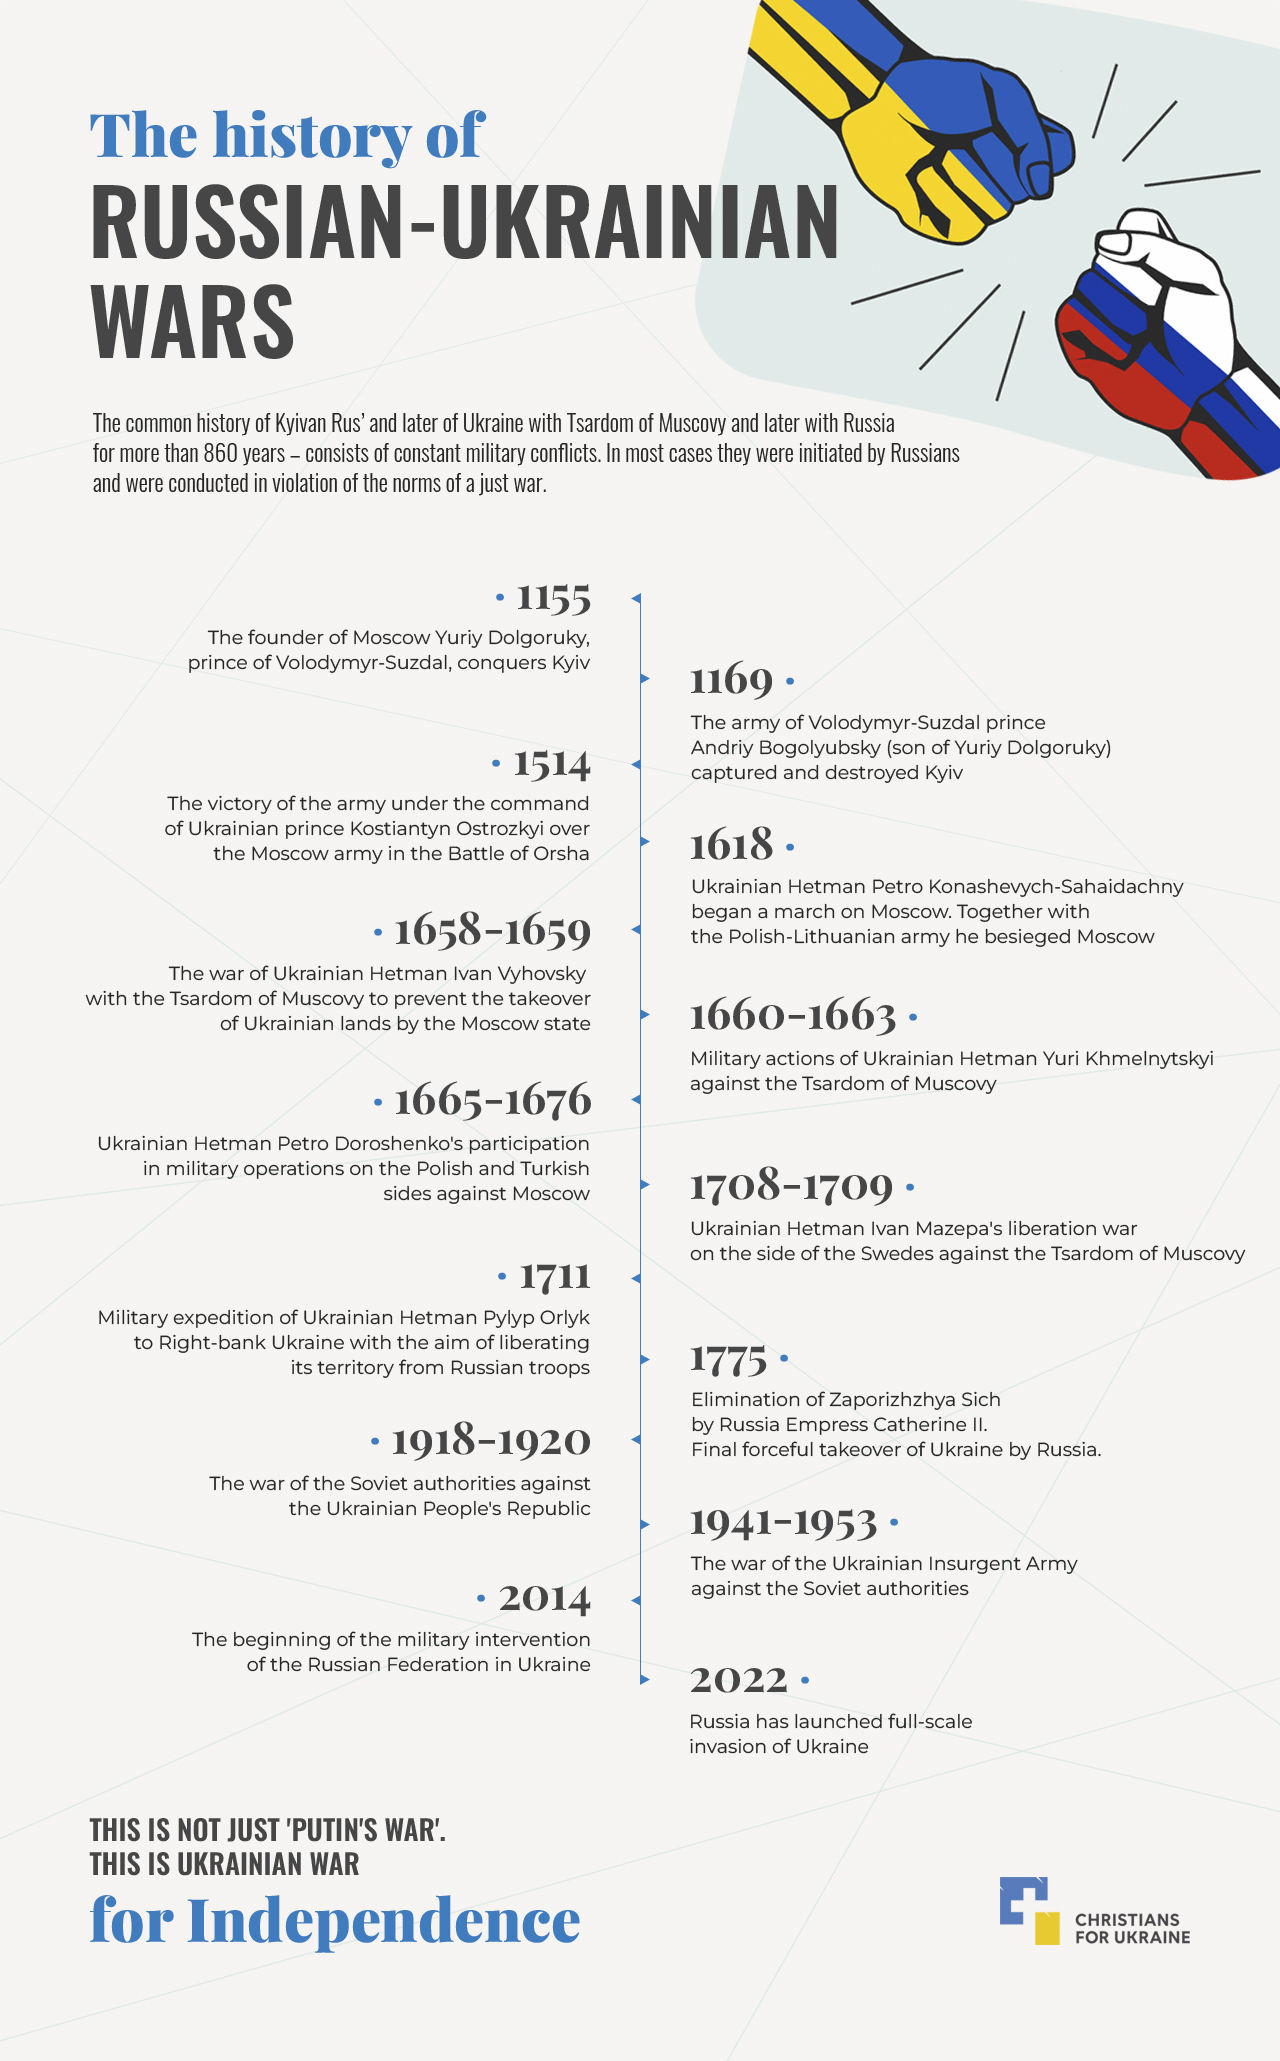 the history of russian-ukrainian wars